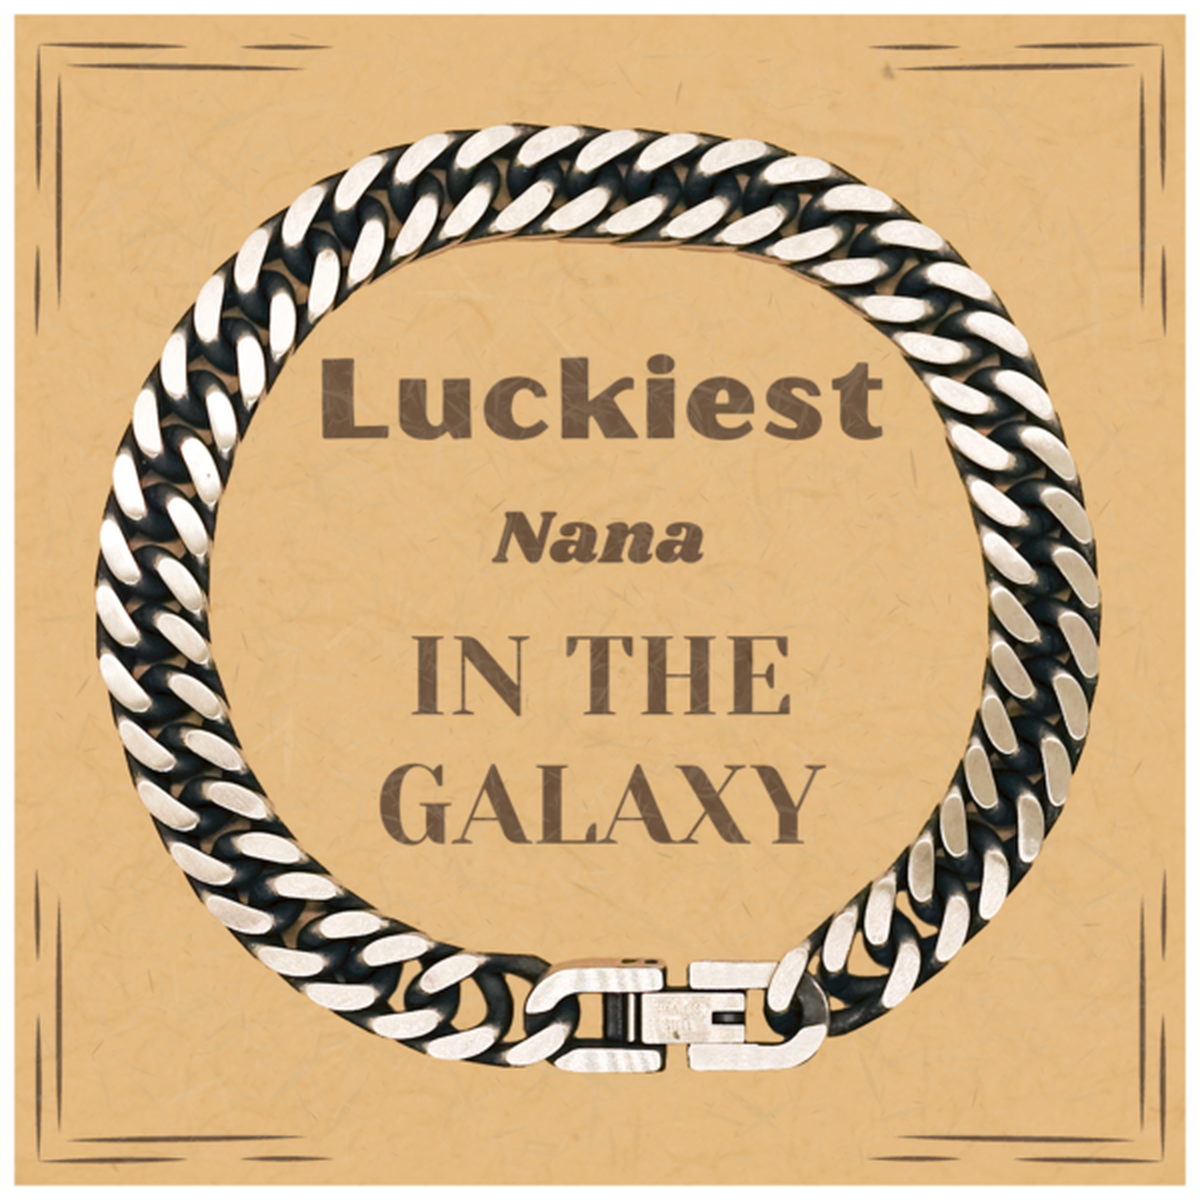 Luckiest Nana in the Galaxy, To My Nana Message Card Gifts, Christmas Nana Cuban Link Chain Bracelet Gifts, X-mas Birthday Unique Gifts For Nana Men Women